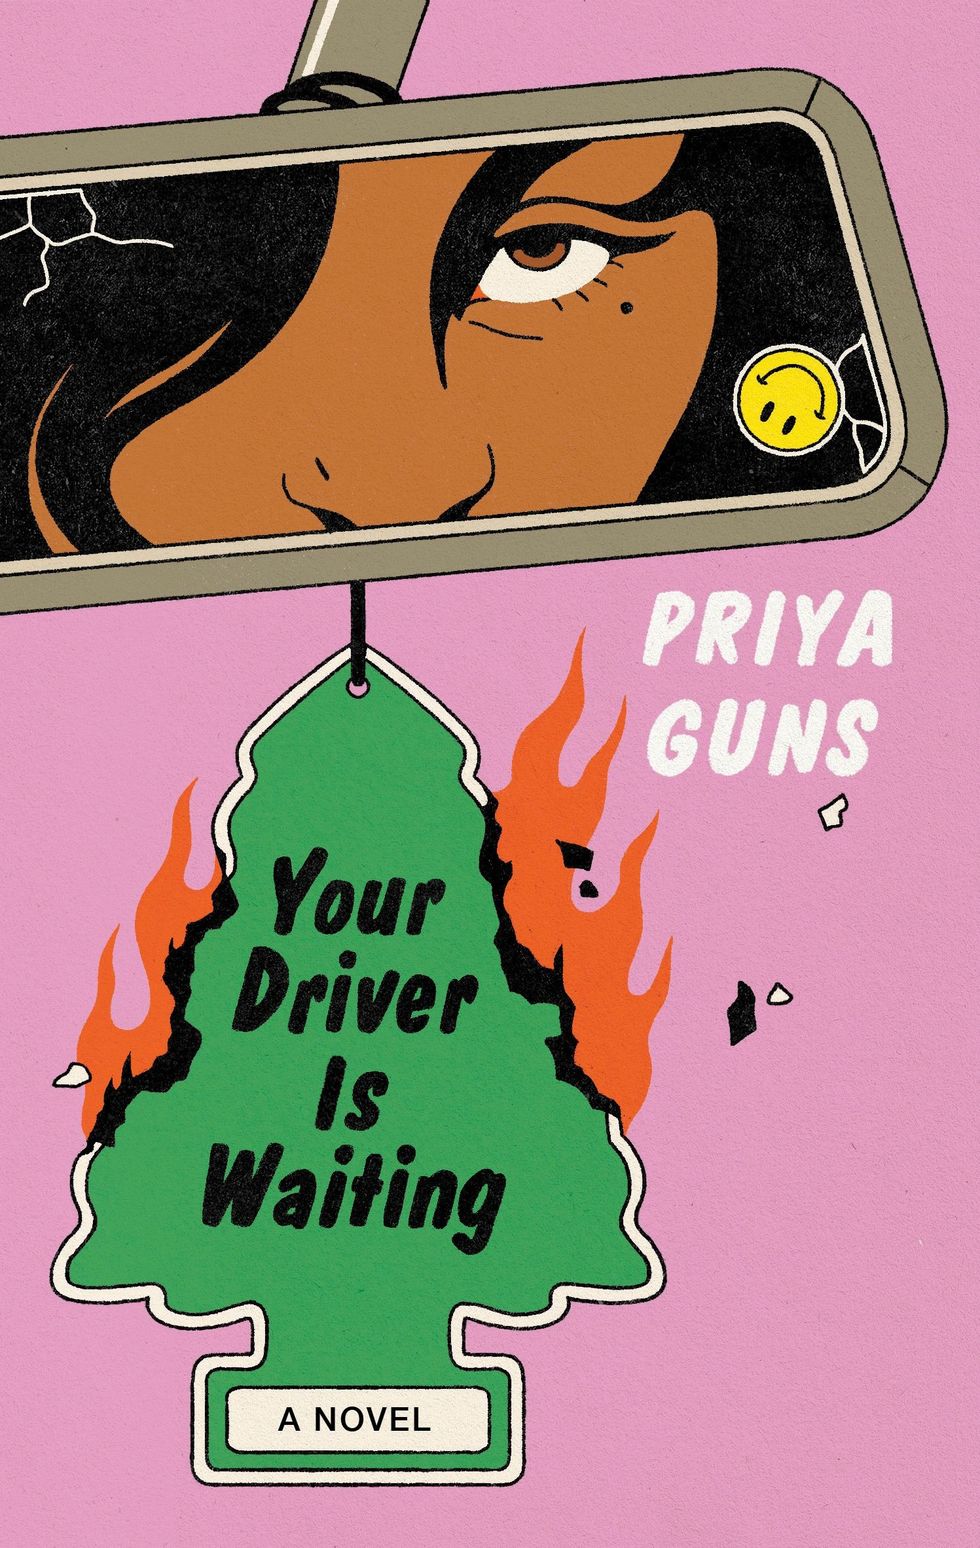 <i>Your Driver is Waiting</i>, by Priya Guns 